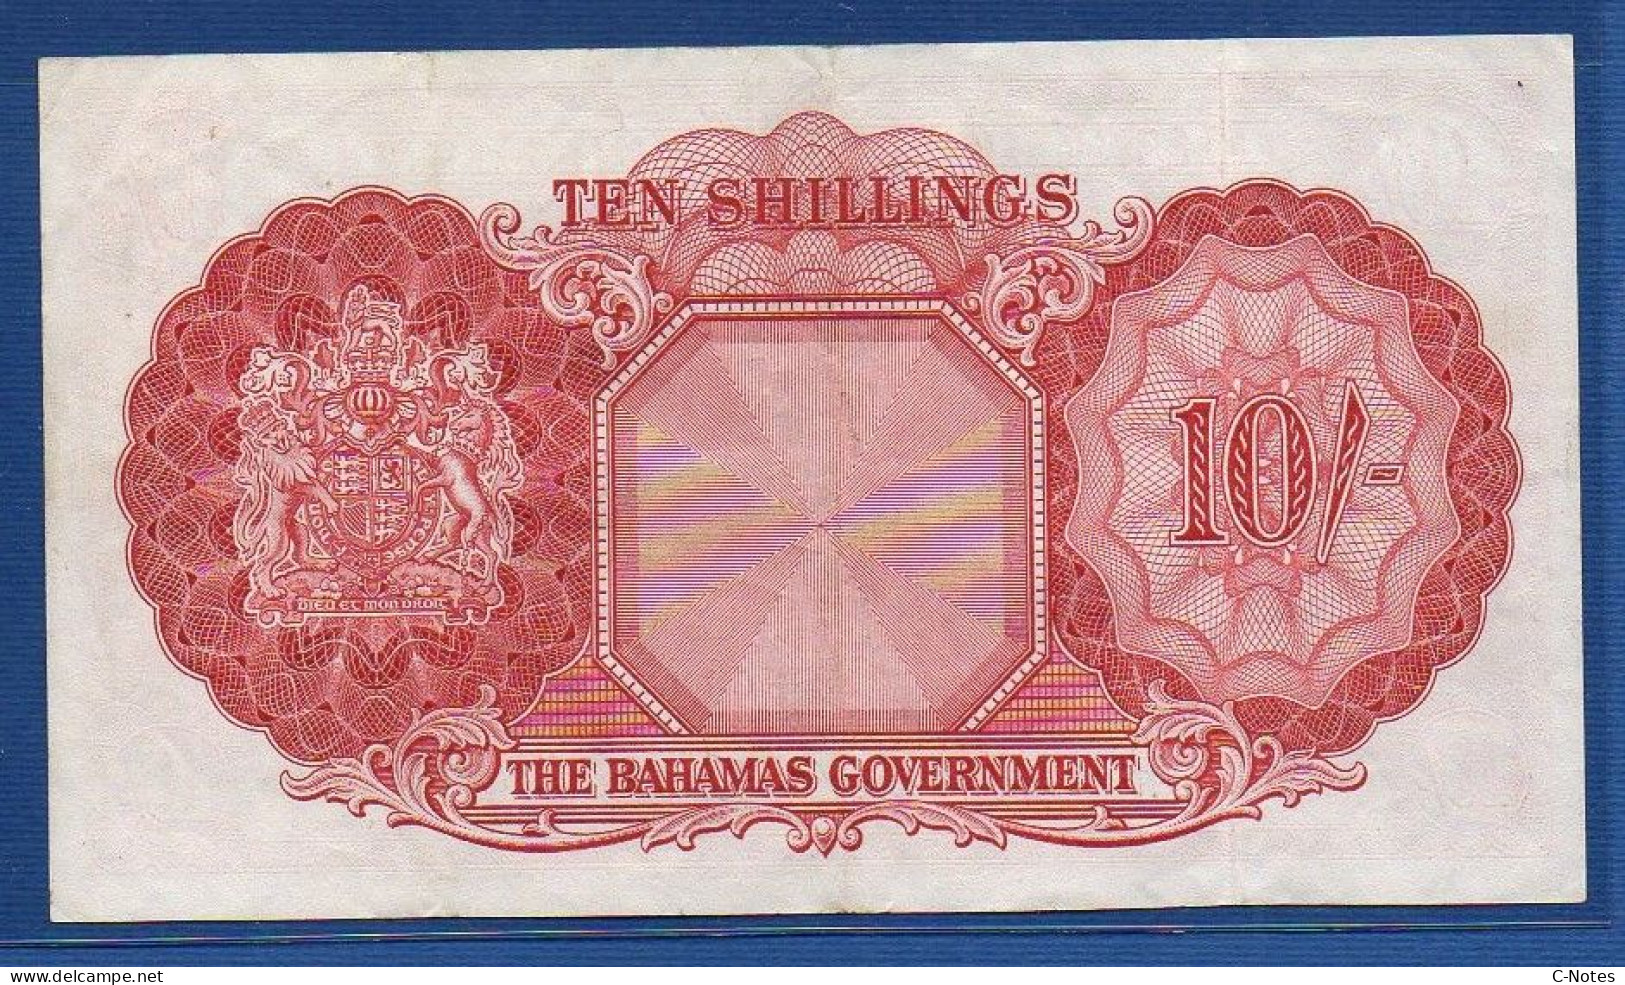 BAHAMAS - P.14d – 10 Shillings L. 1936 (1953) VF+, S/n A/3 011285  "Elizabeth II" Issue - Bahamas